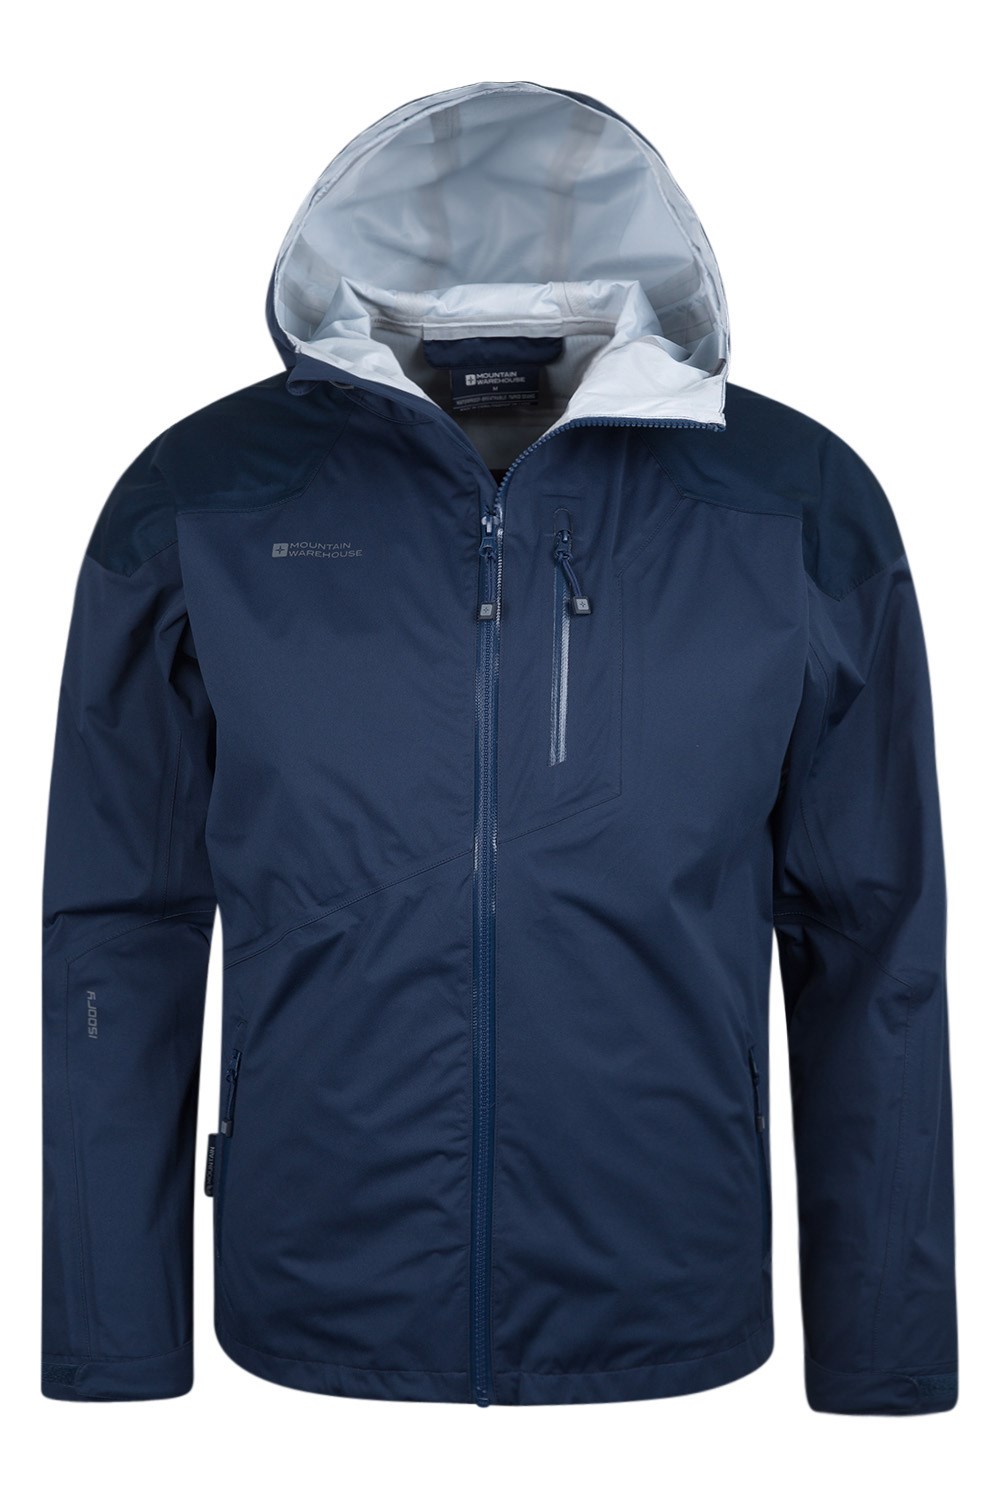 Adjustable Hood & Hem Raincoat Travelling for Mountain Warehouse Bachill Mens Waterproof Jacket Security Pockets Breathable Coat Full Zip Casual Jacket 